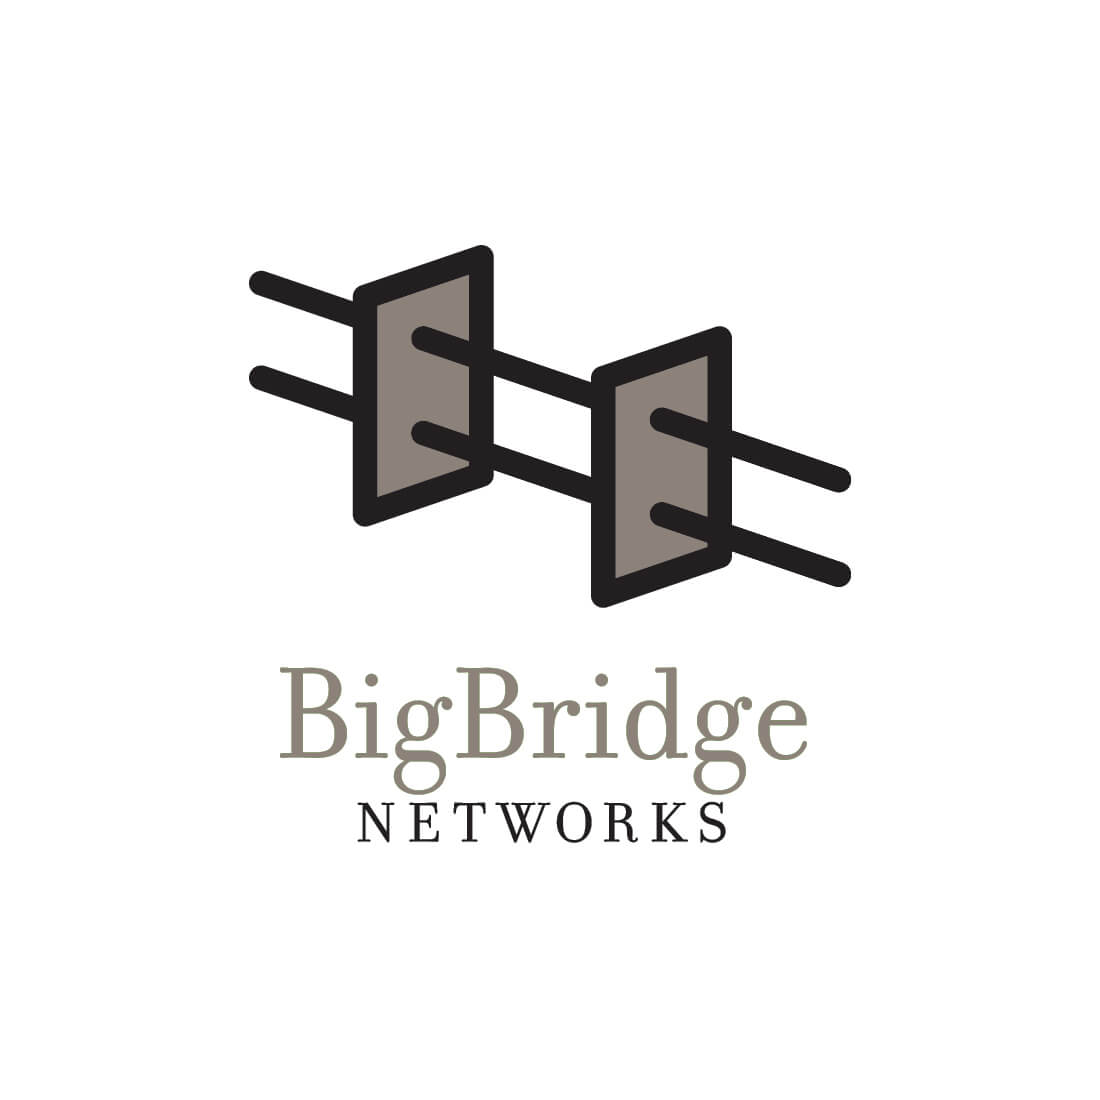 Big Bridge Networks